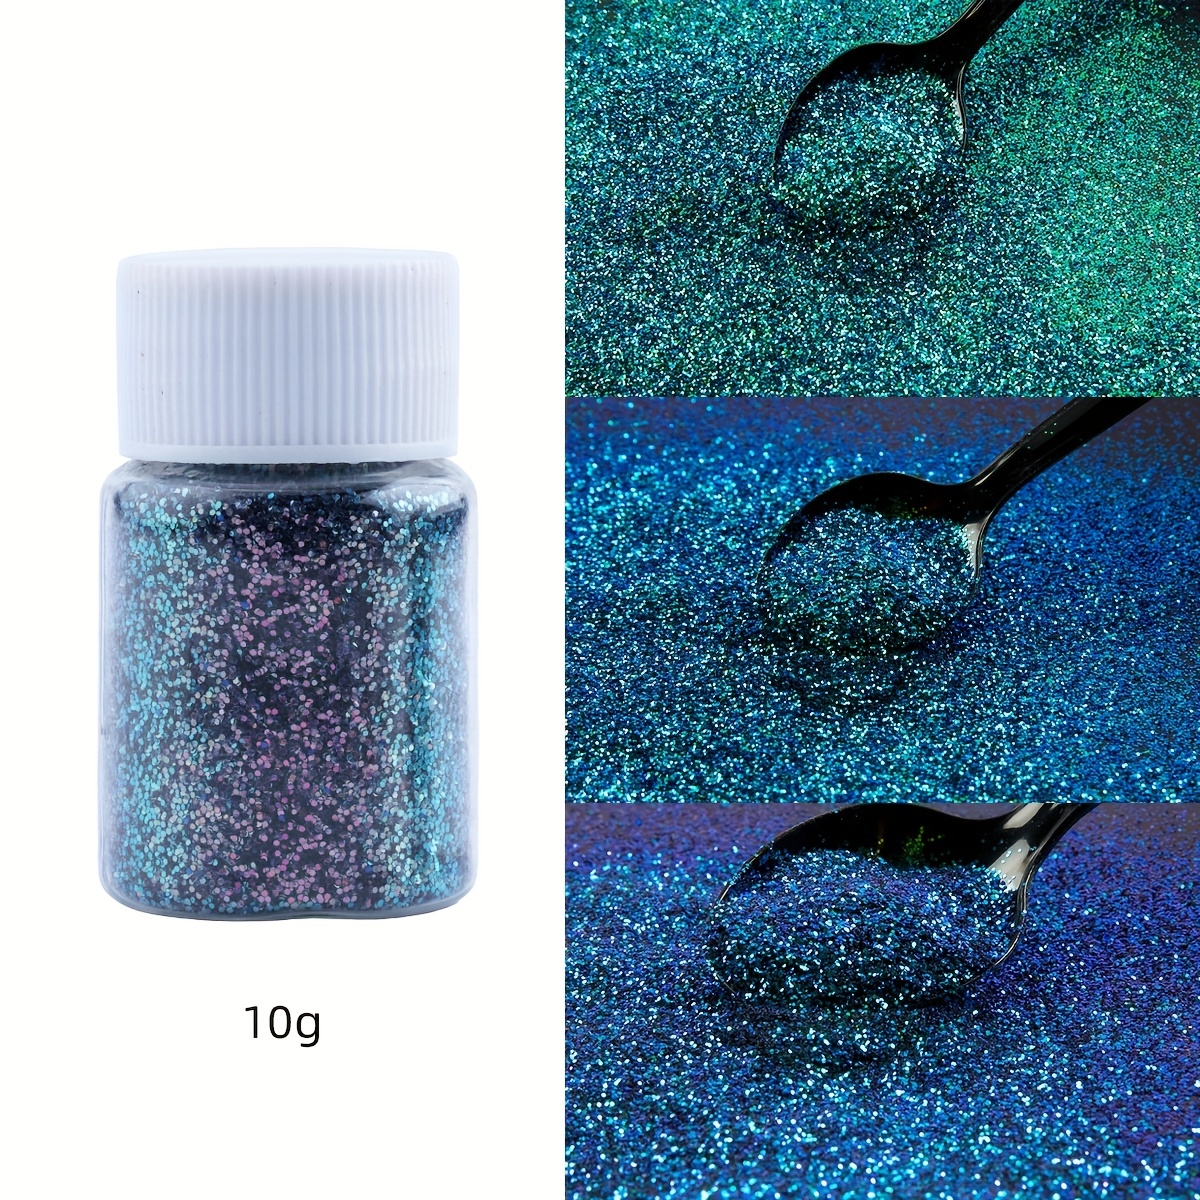 10g/bag Chameleon Color Shifting Epoxy Resin Pigment Chameleon